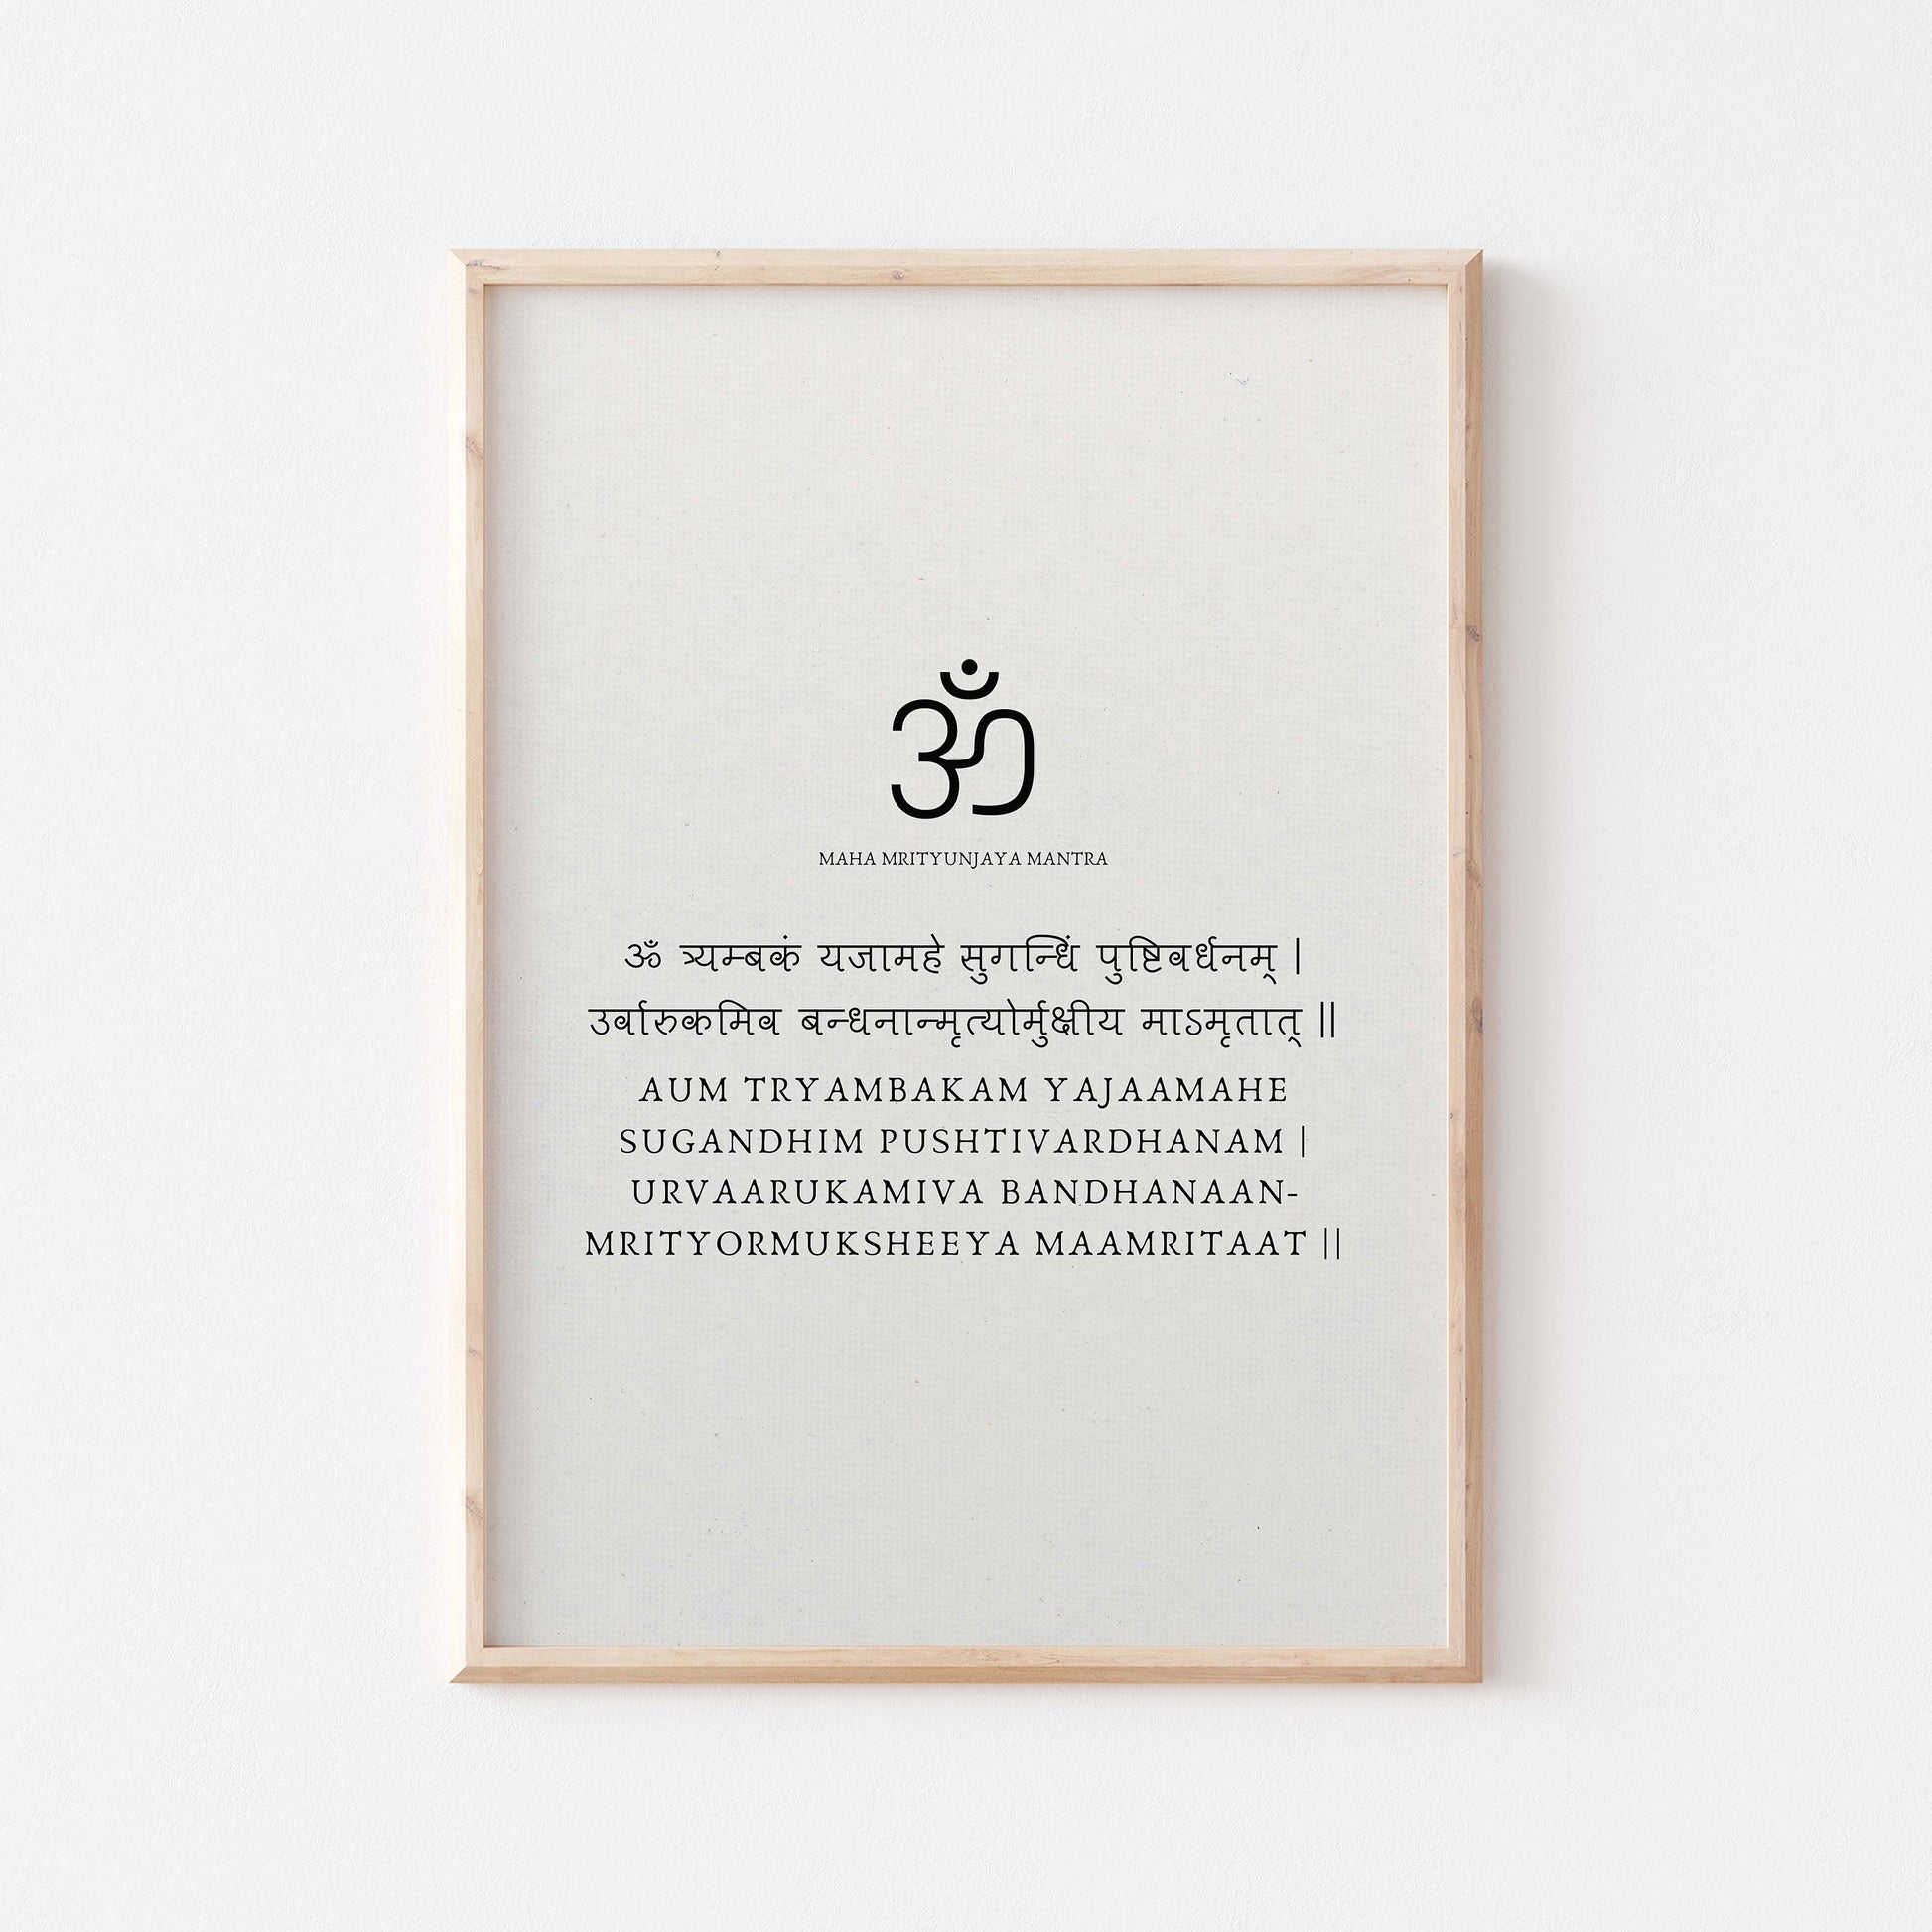 maha mrityunjaya mantra in sanskrit & english poster in black & white in wood frame mockup